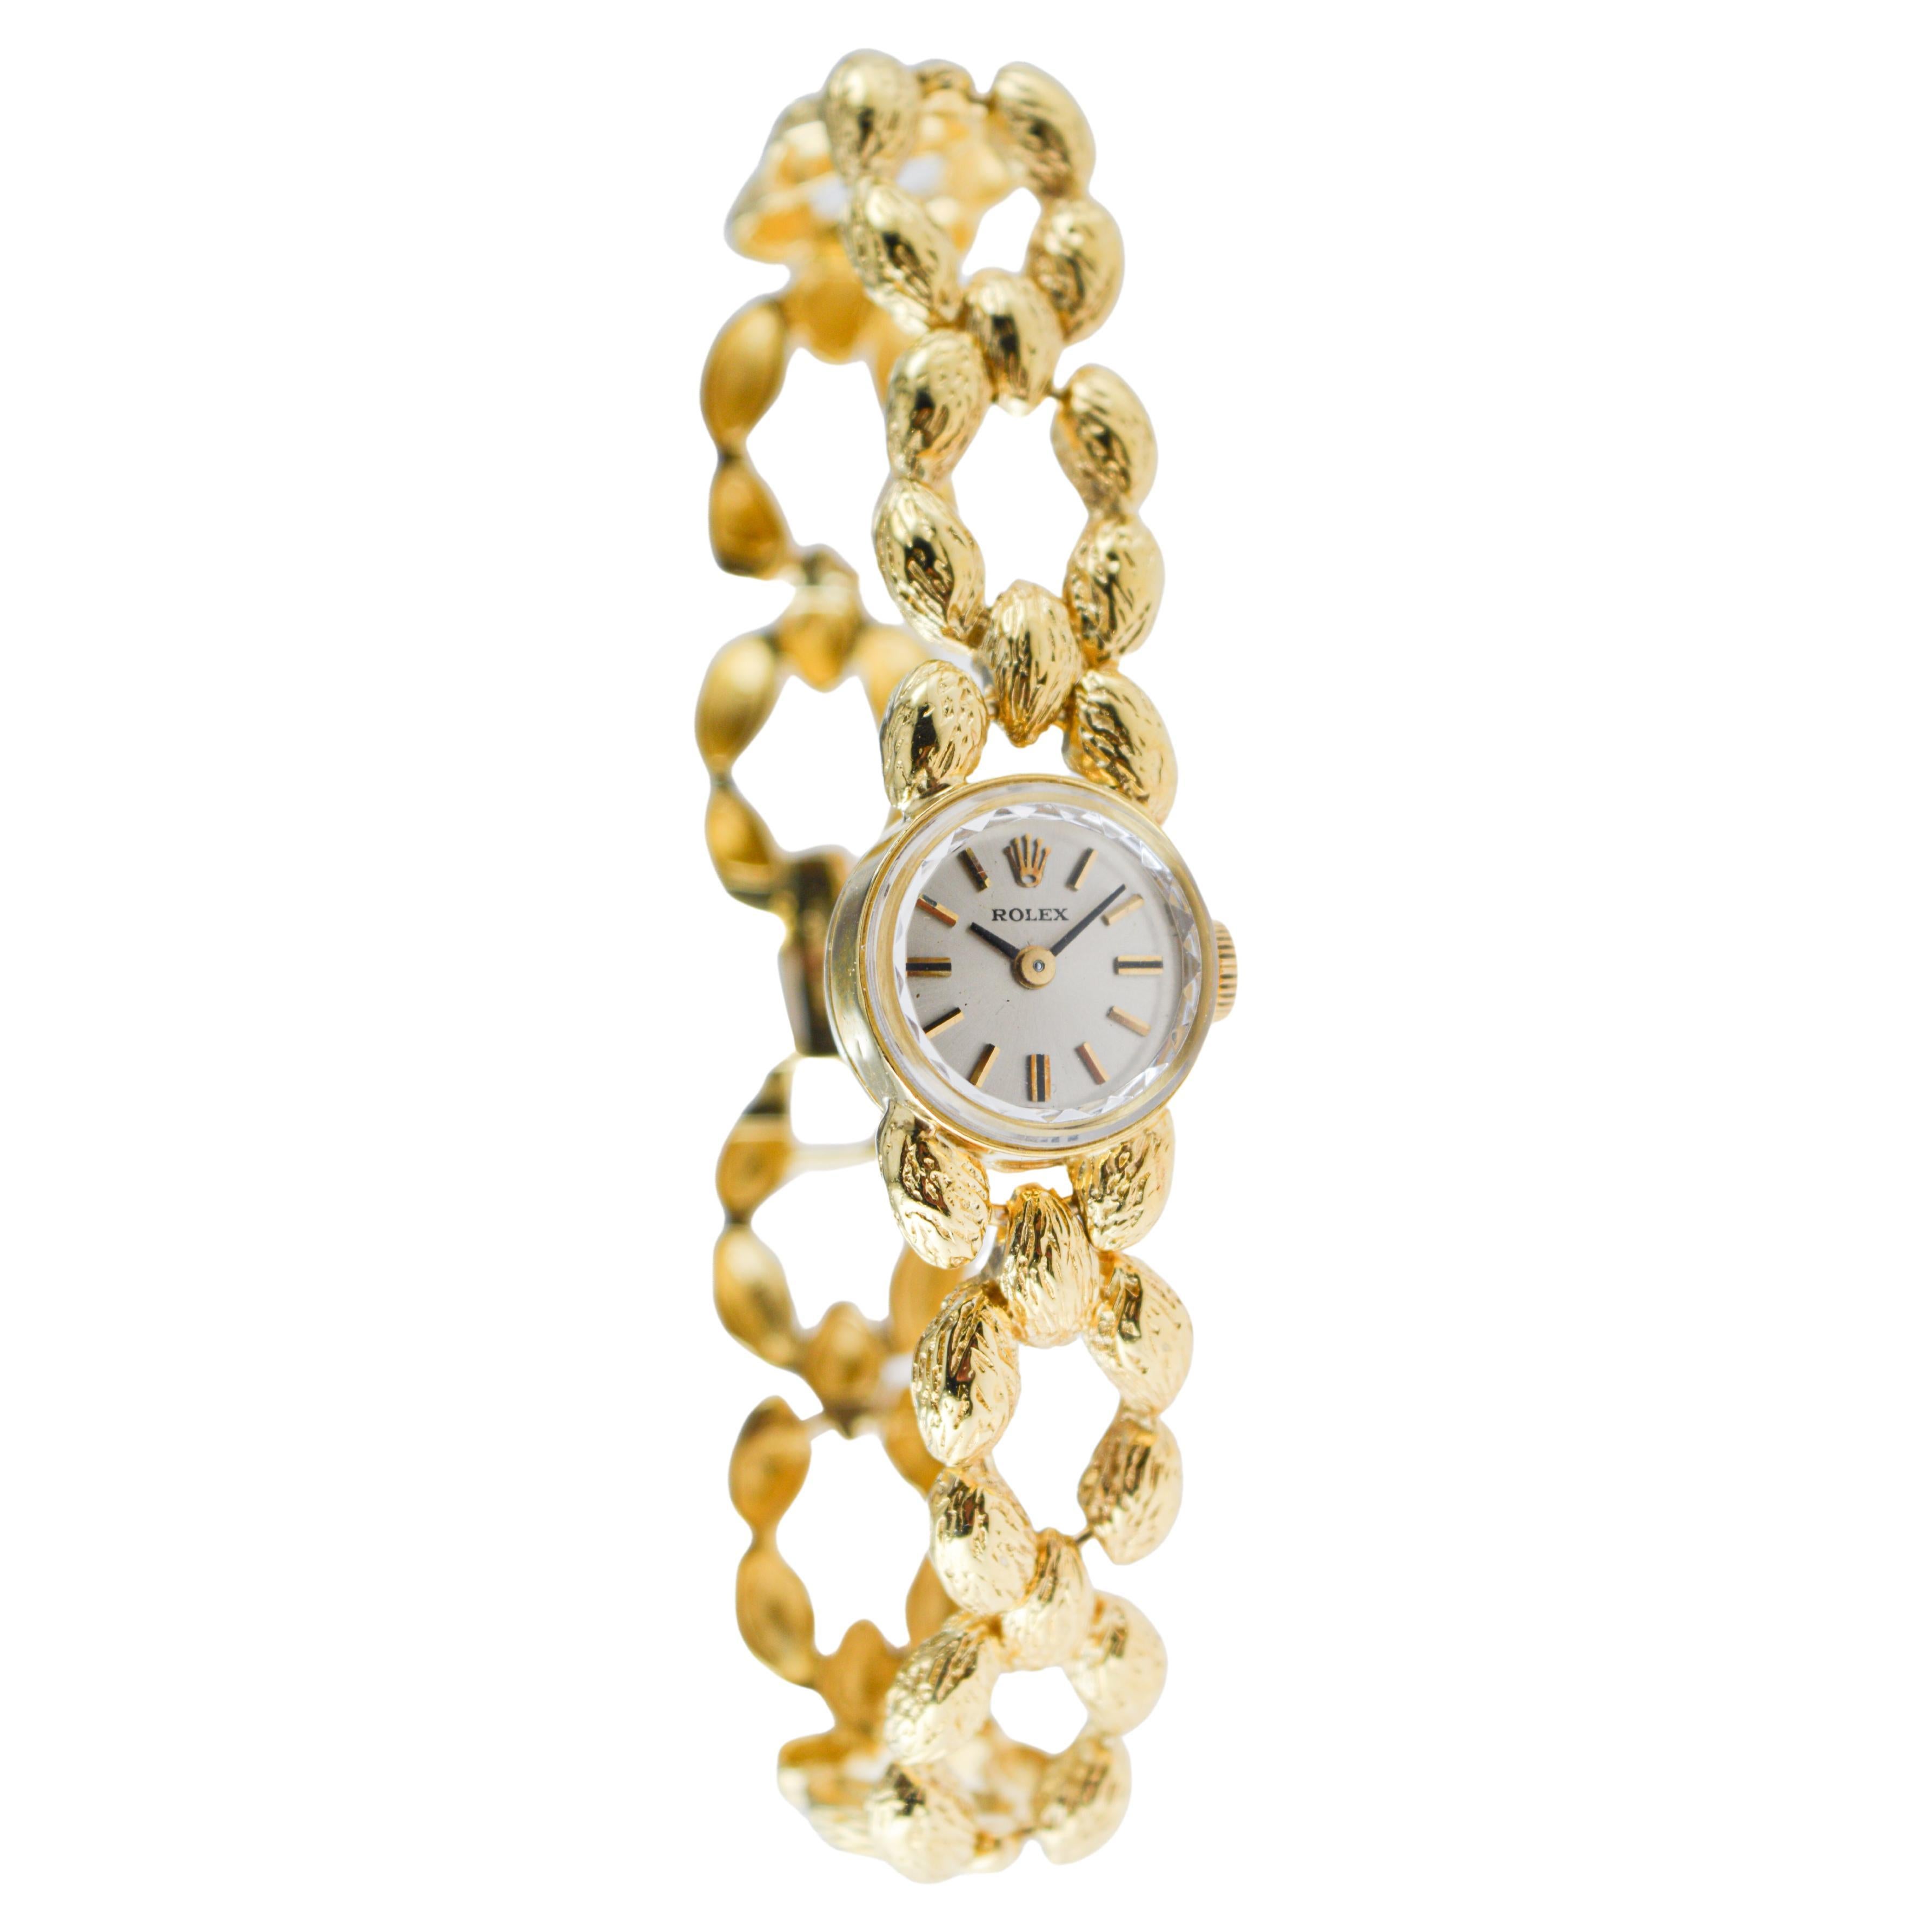  Montre bracelet en or massif 14Kt Rolex  Pour femmes 